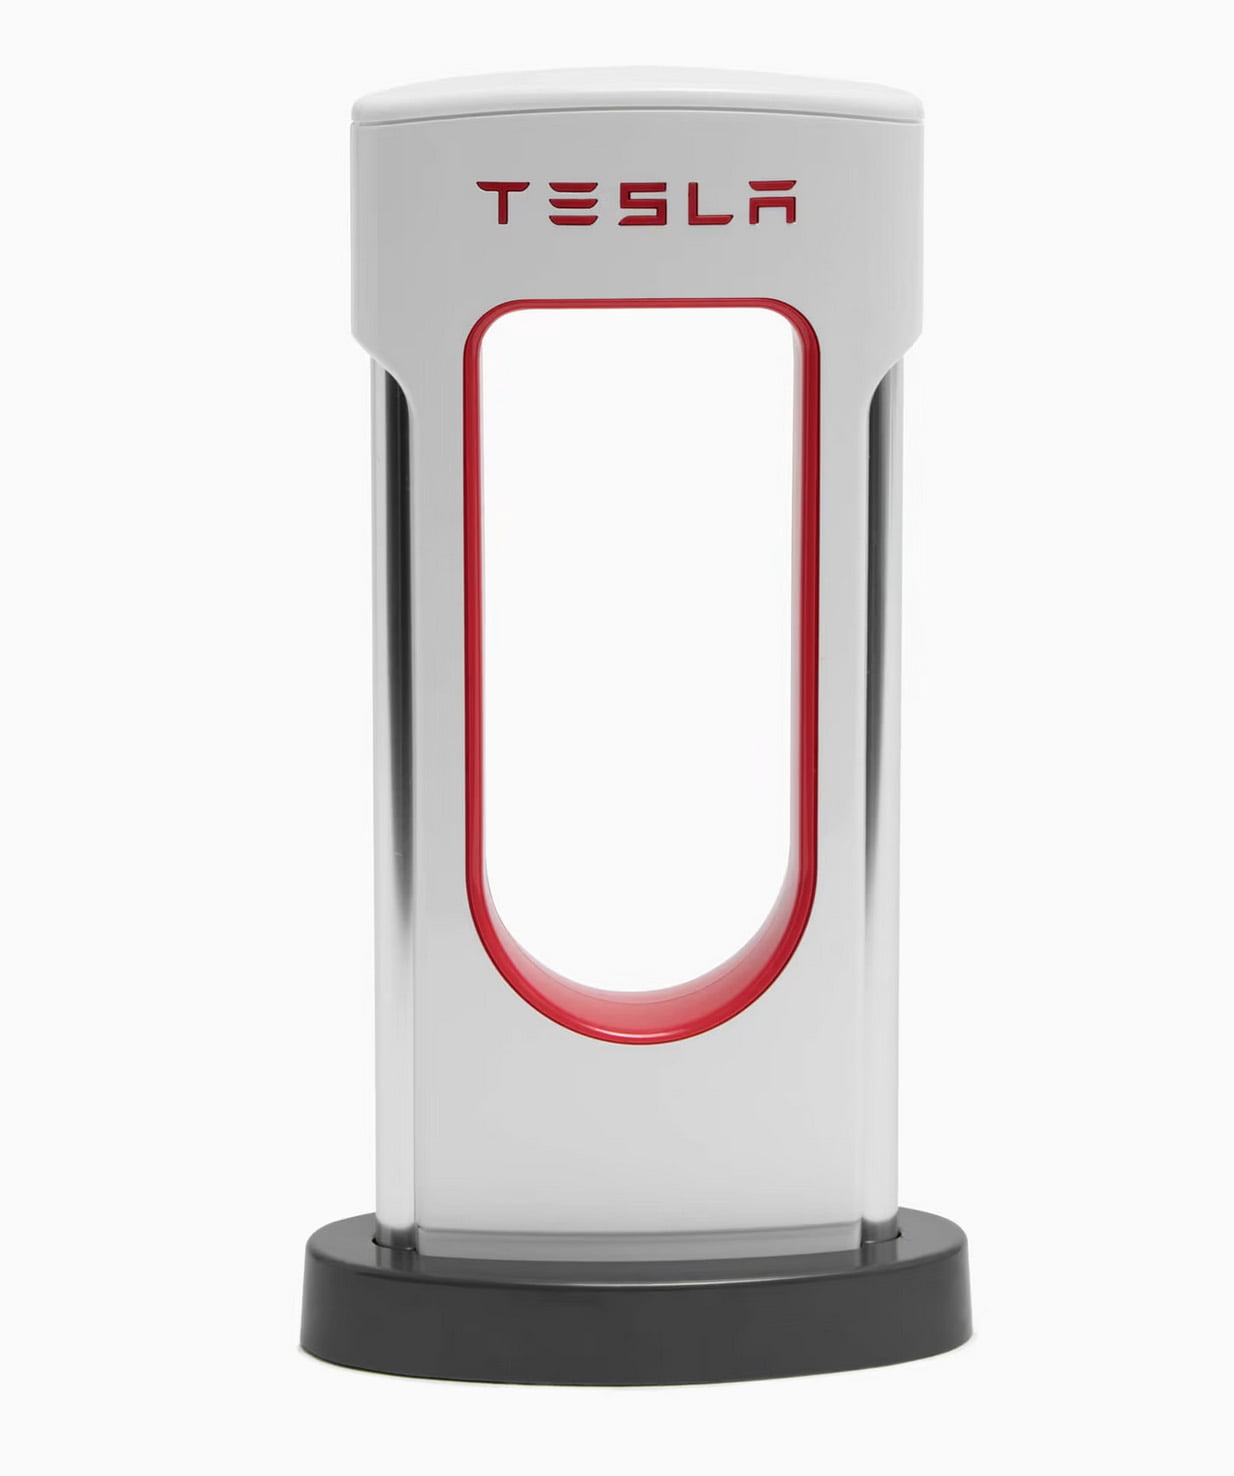 Tesla Desktop Supercharger USB cable organizer